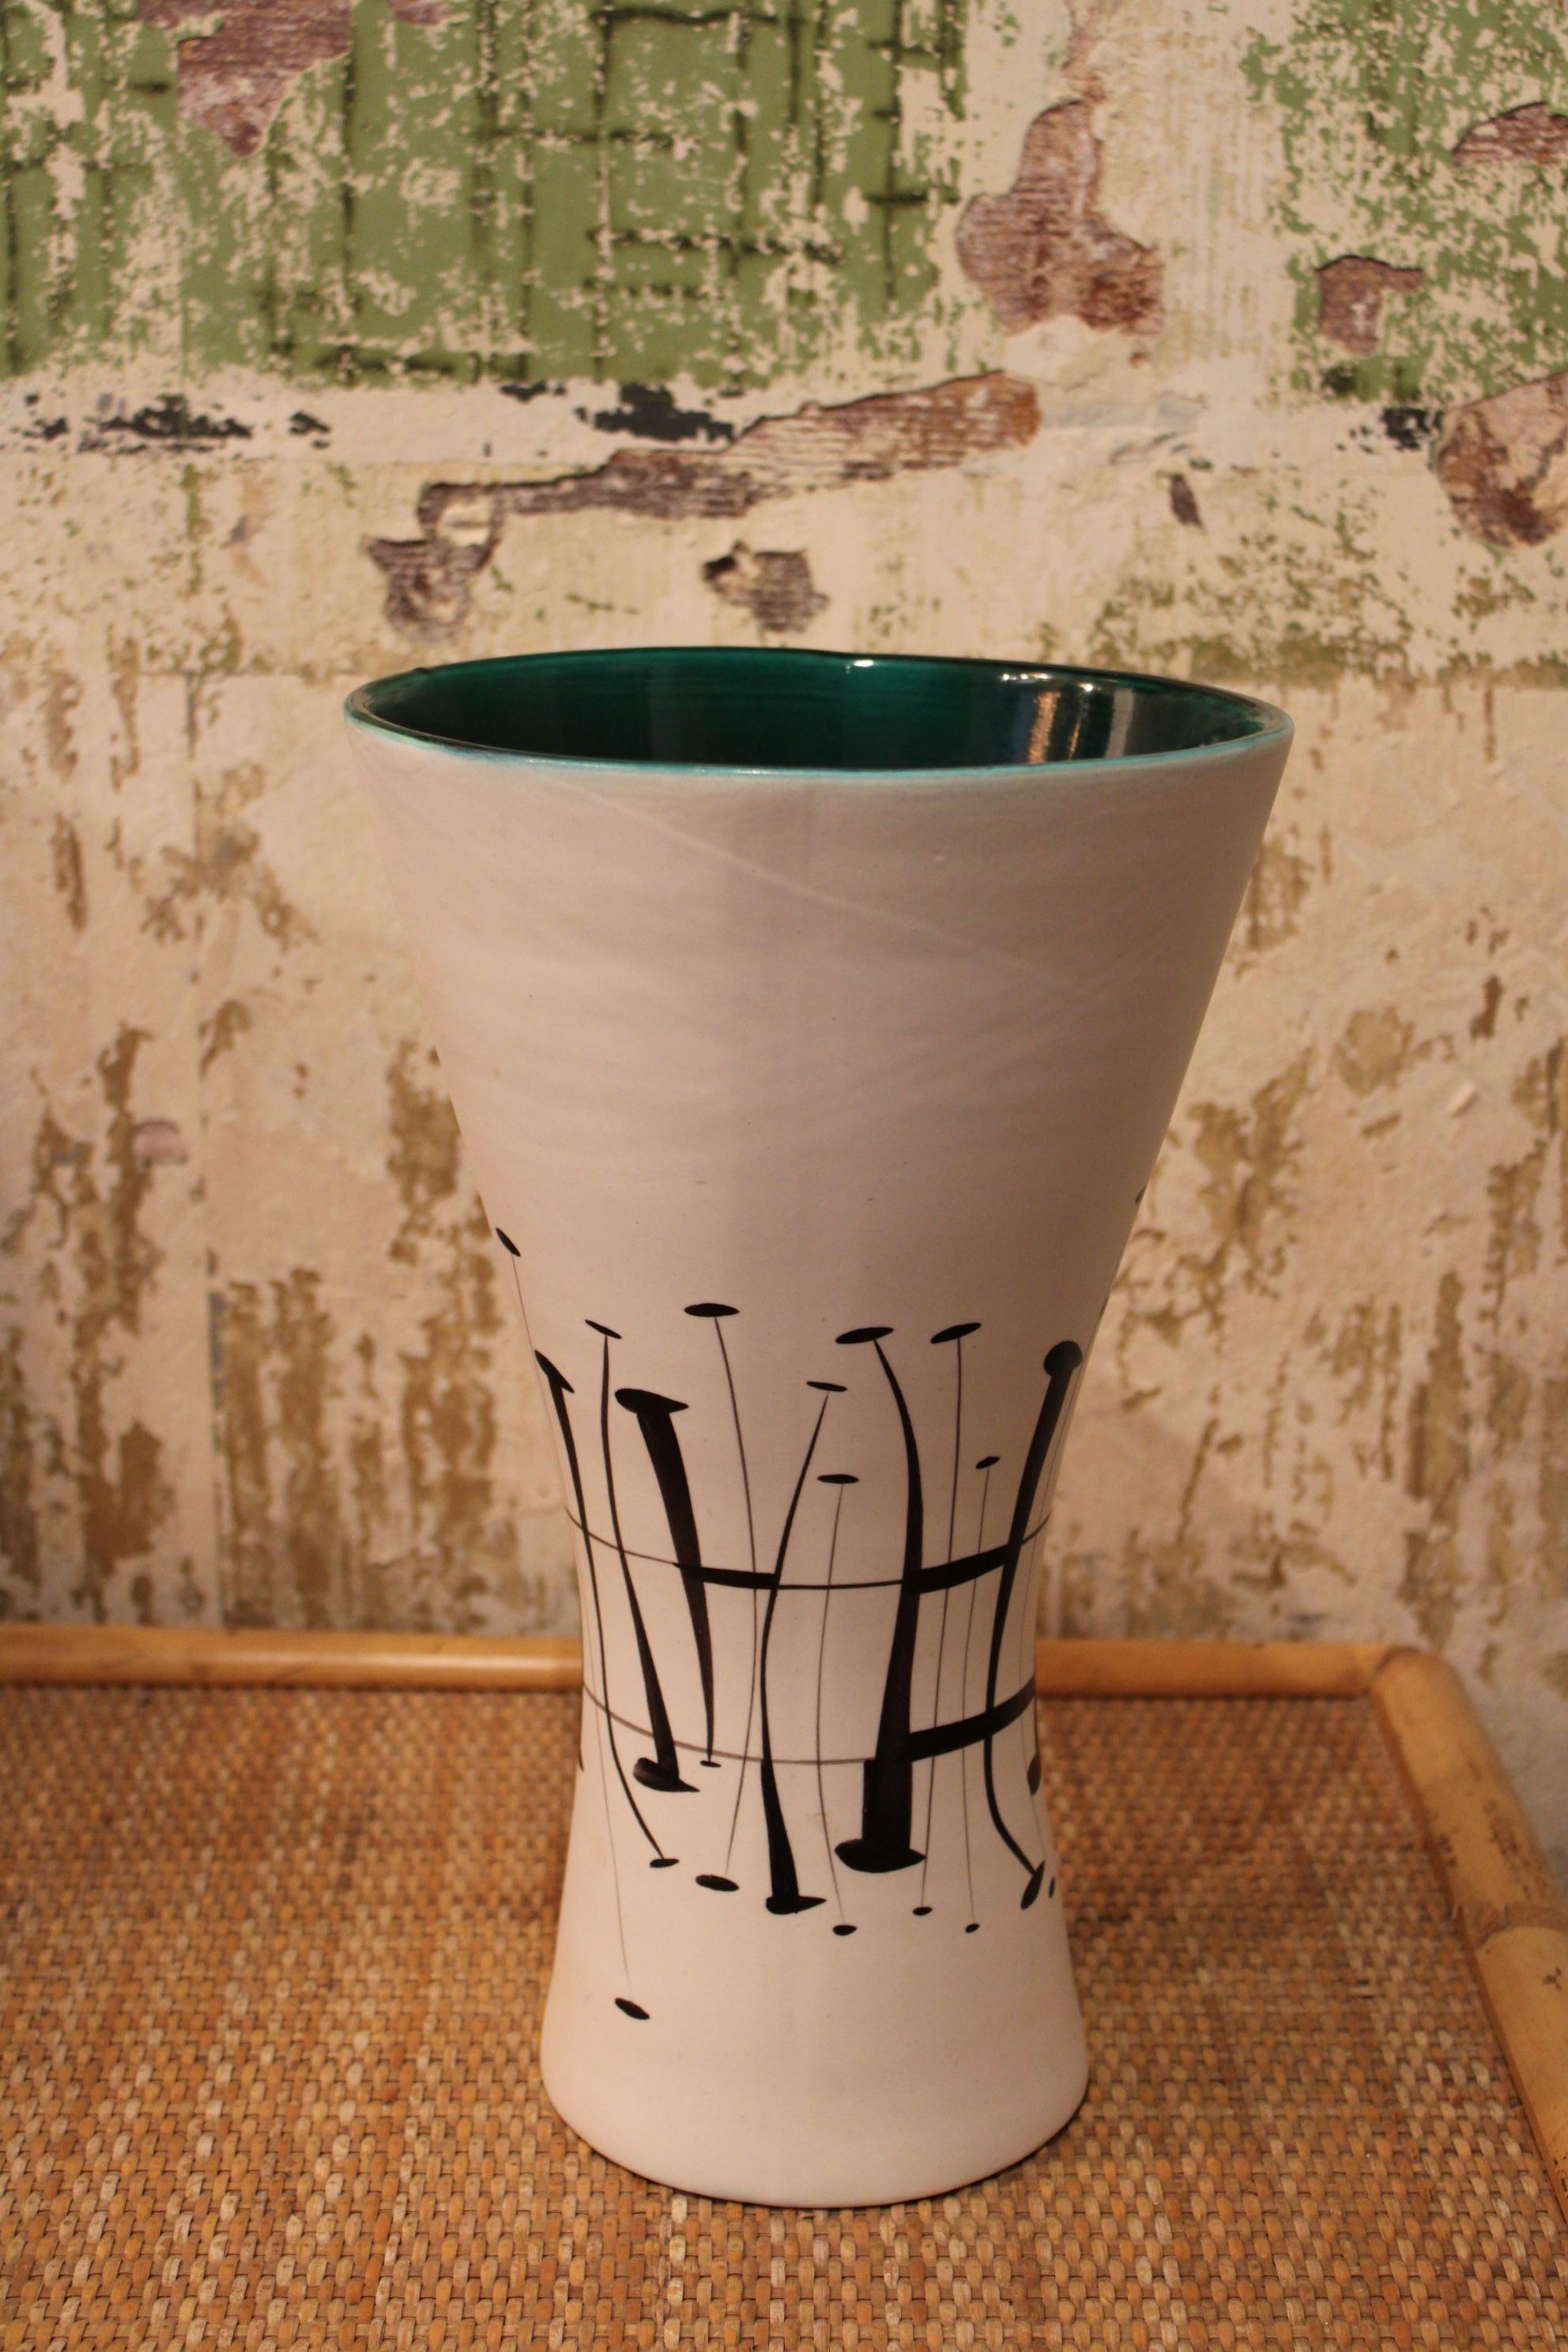 Ceramic diabolo vase by Roger Capron
Signed under the base 
France, 20th century.